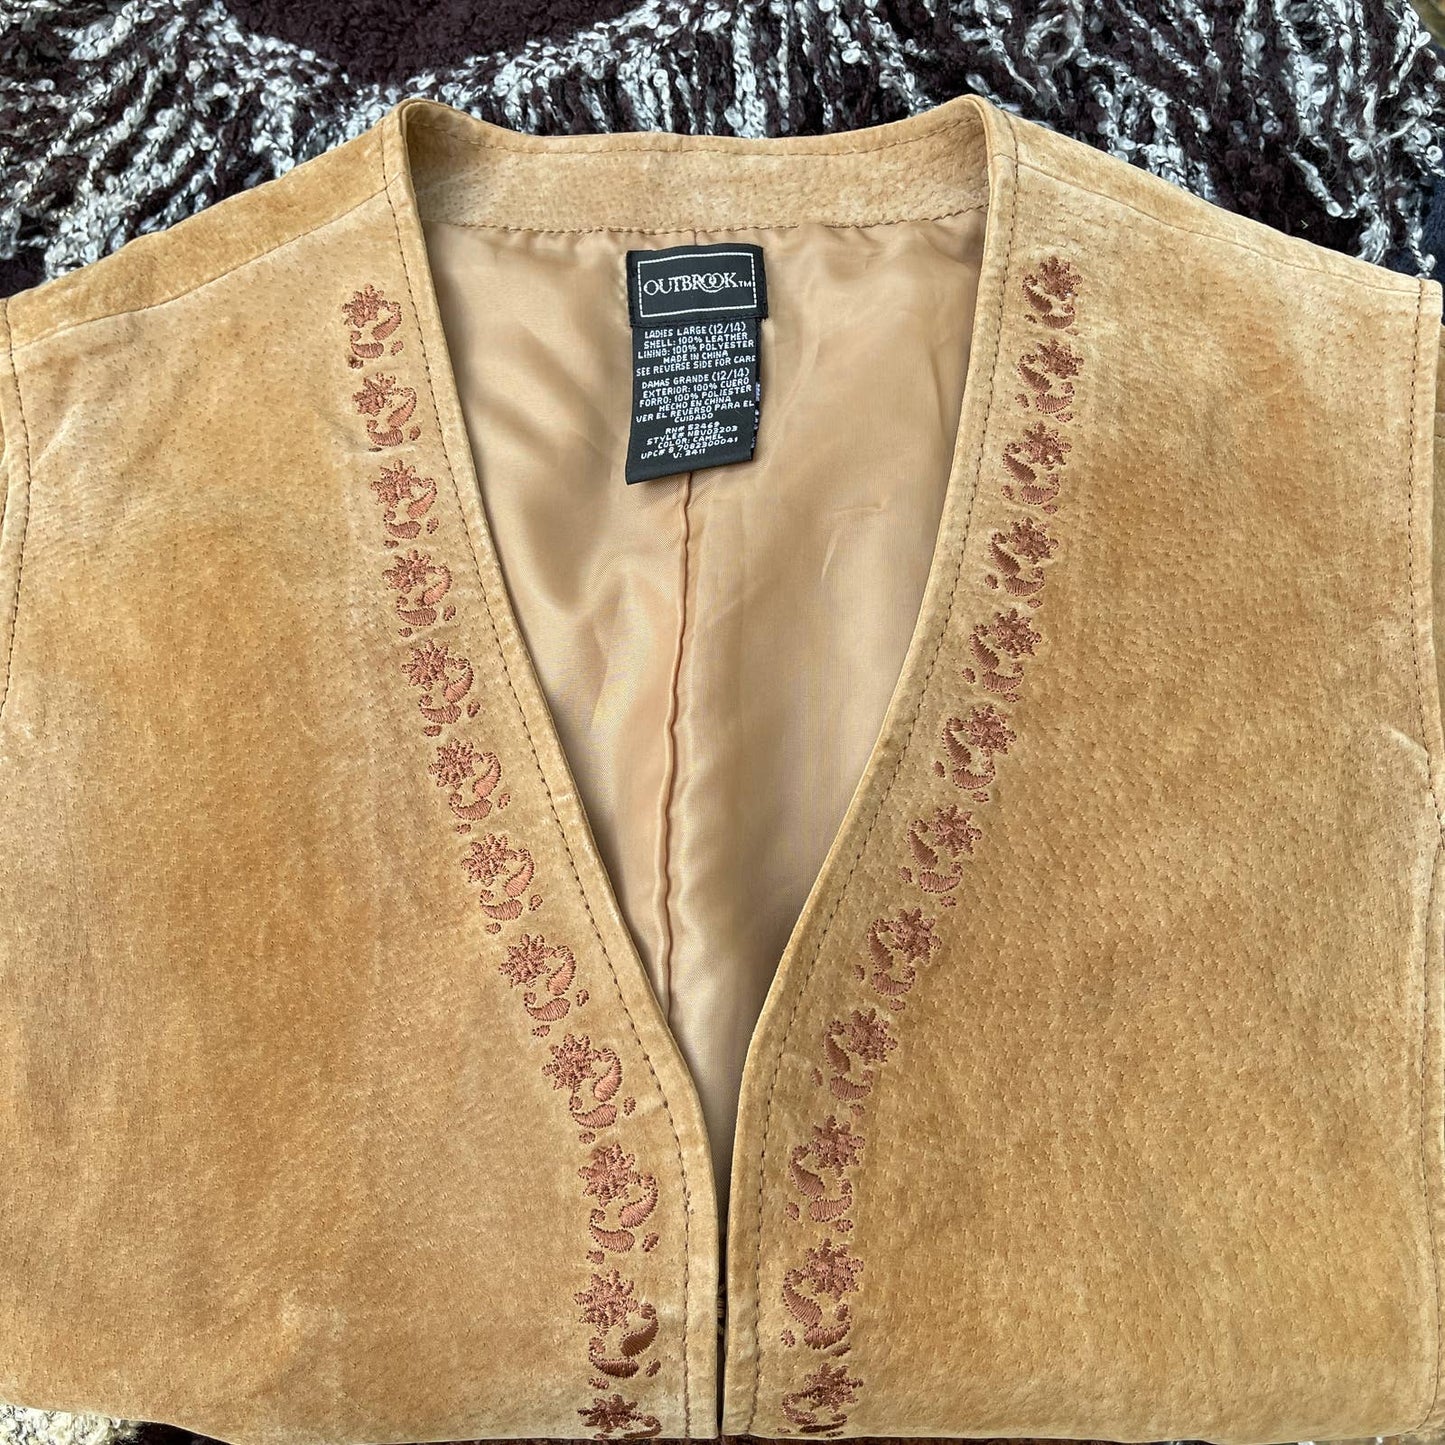 Vintage 90s Tan Suede Leather Vest Embroidered Leaves Pockets Outbrook Size L